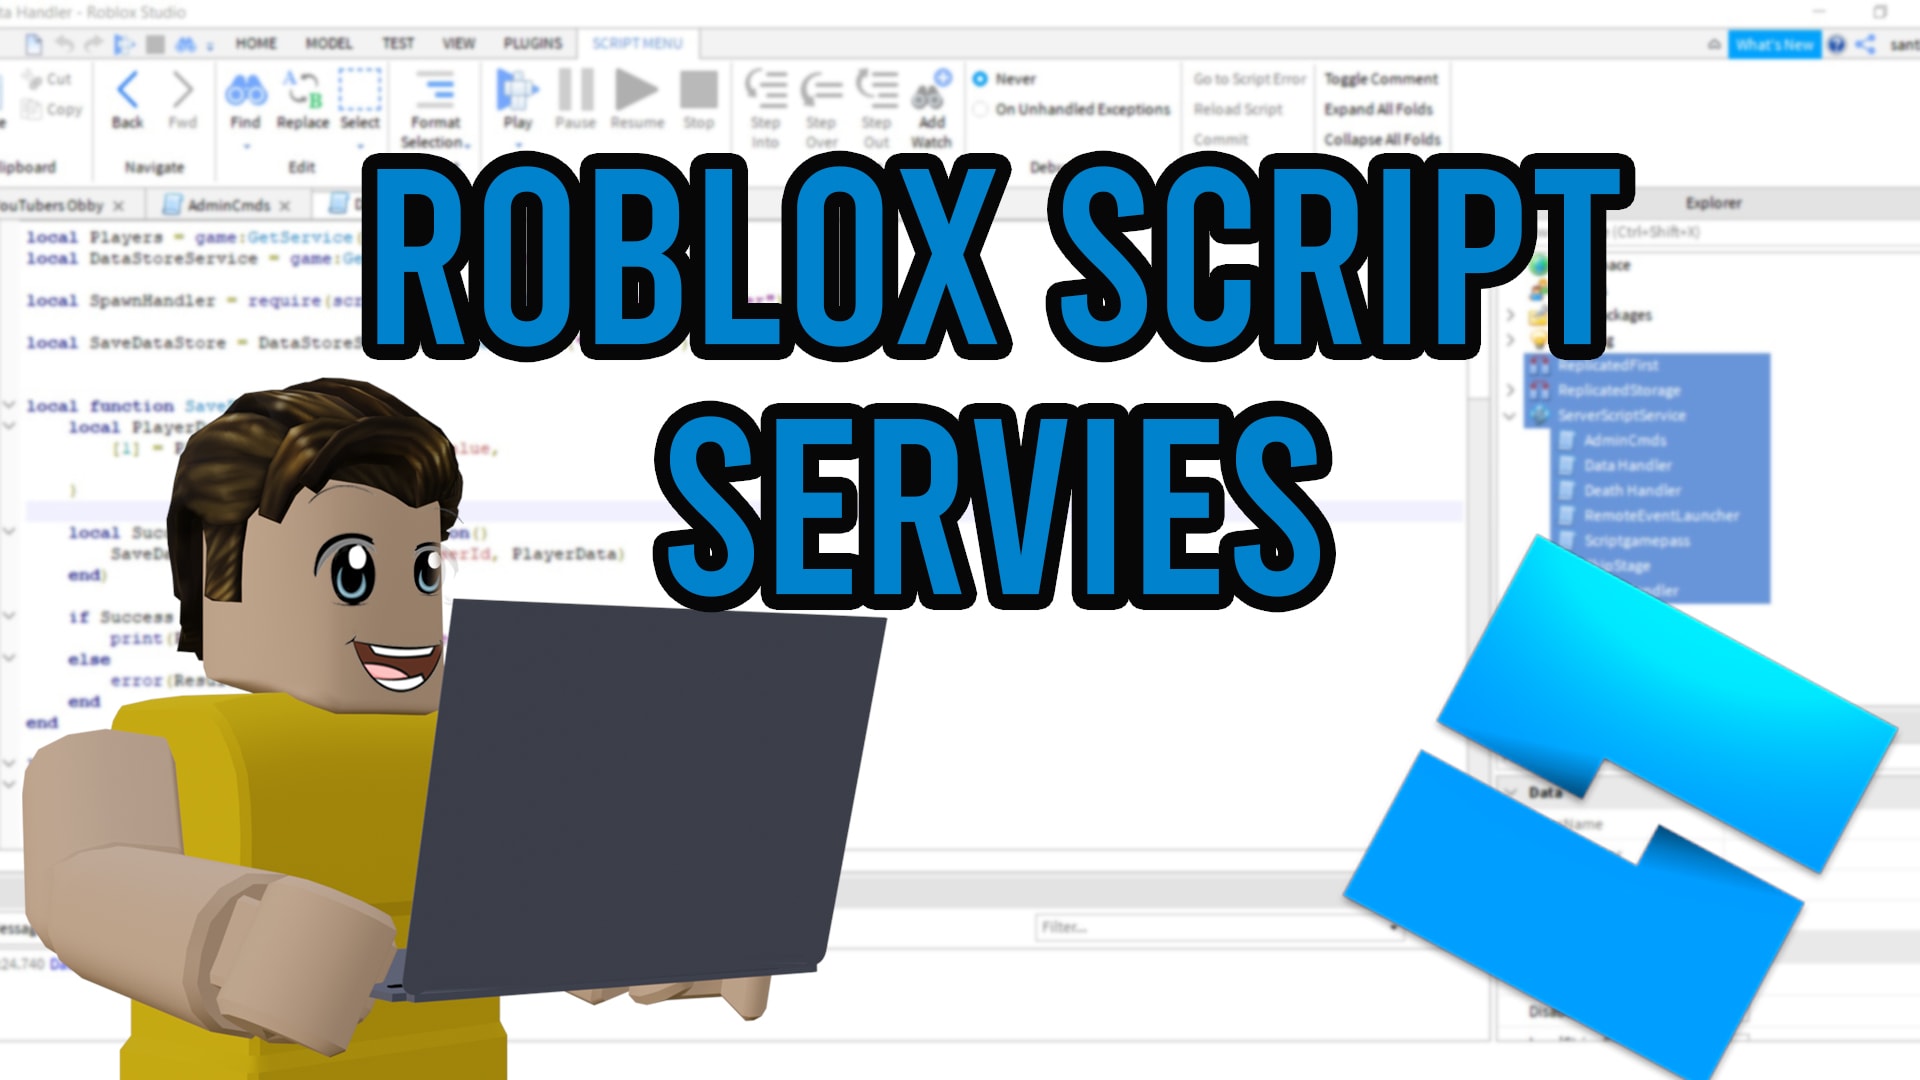 Roblox Gui Scripts